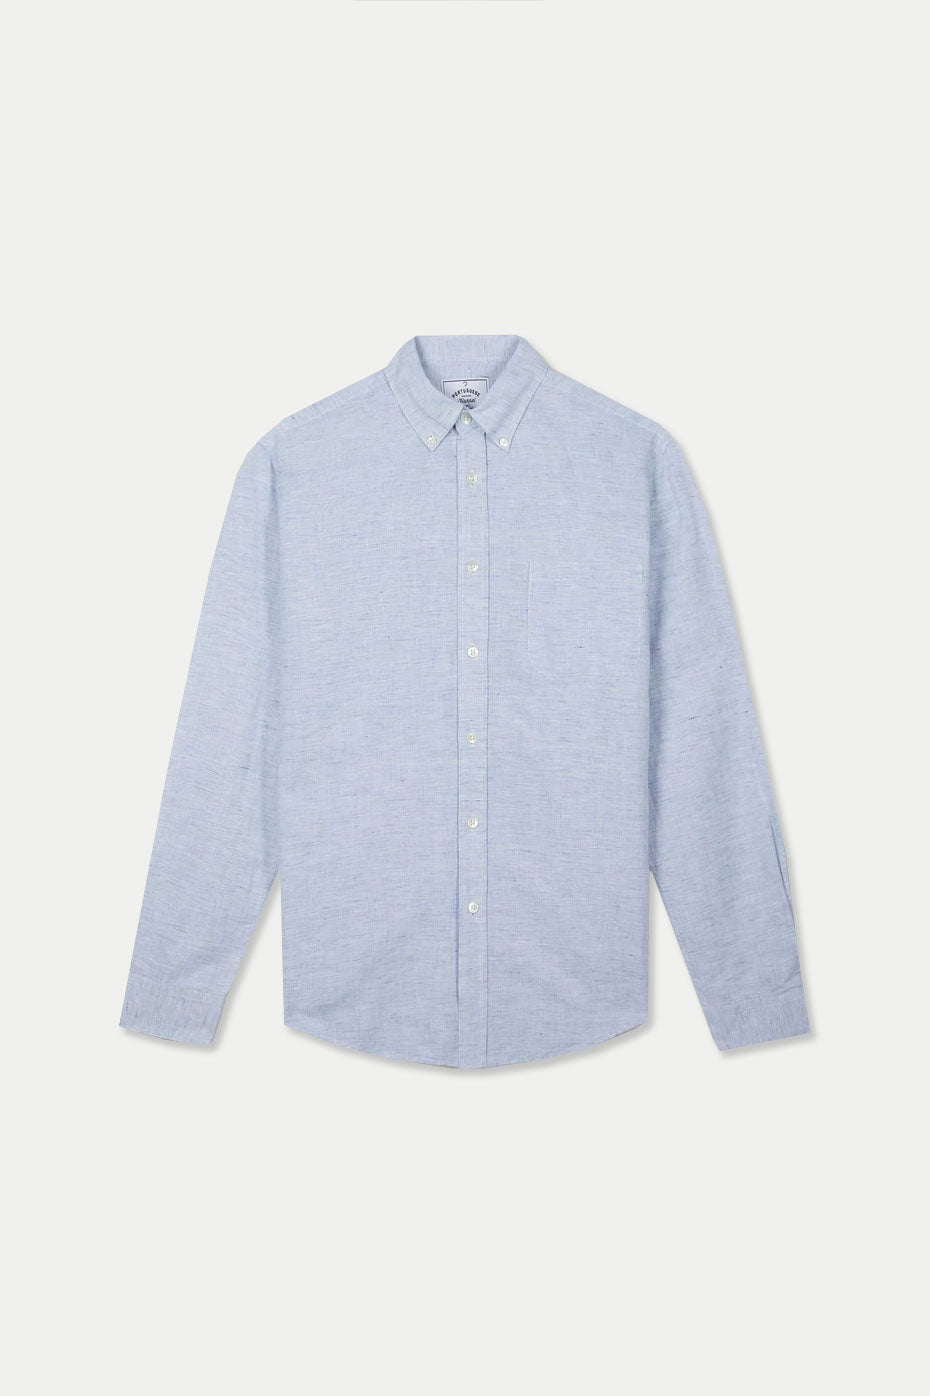  Portuguese Flannel Light Blue Corg Shirt